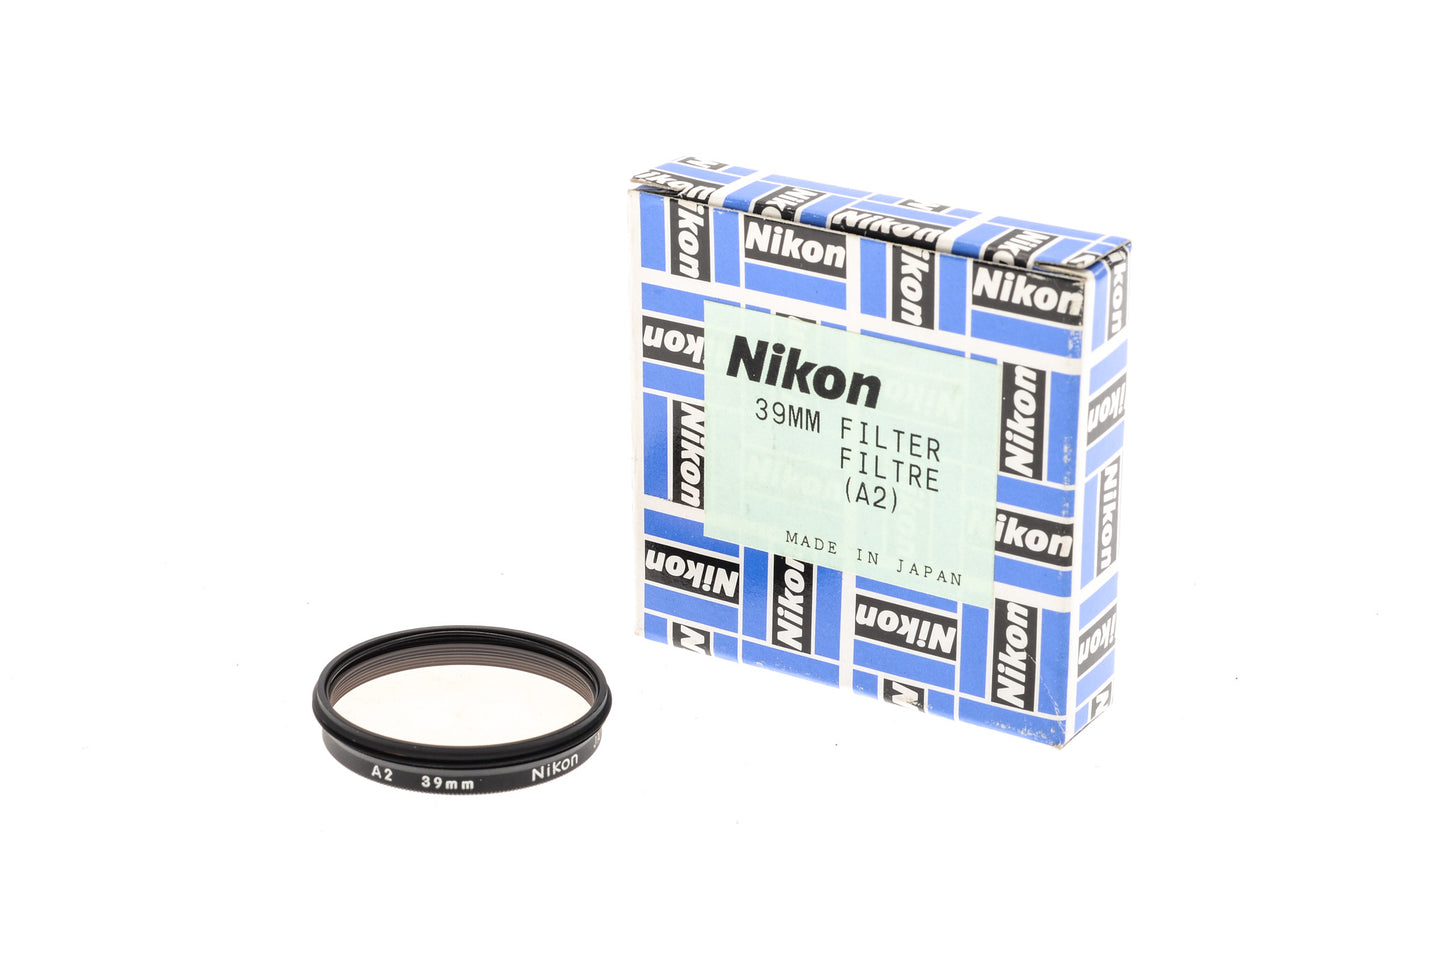 Nikon 39mm Amber Warming Filter A2 - Accessory